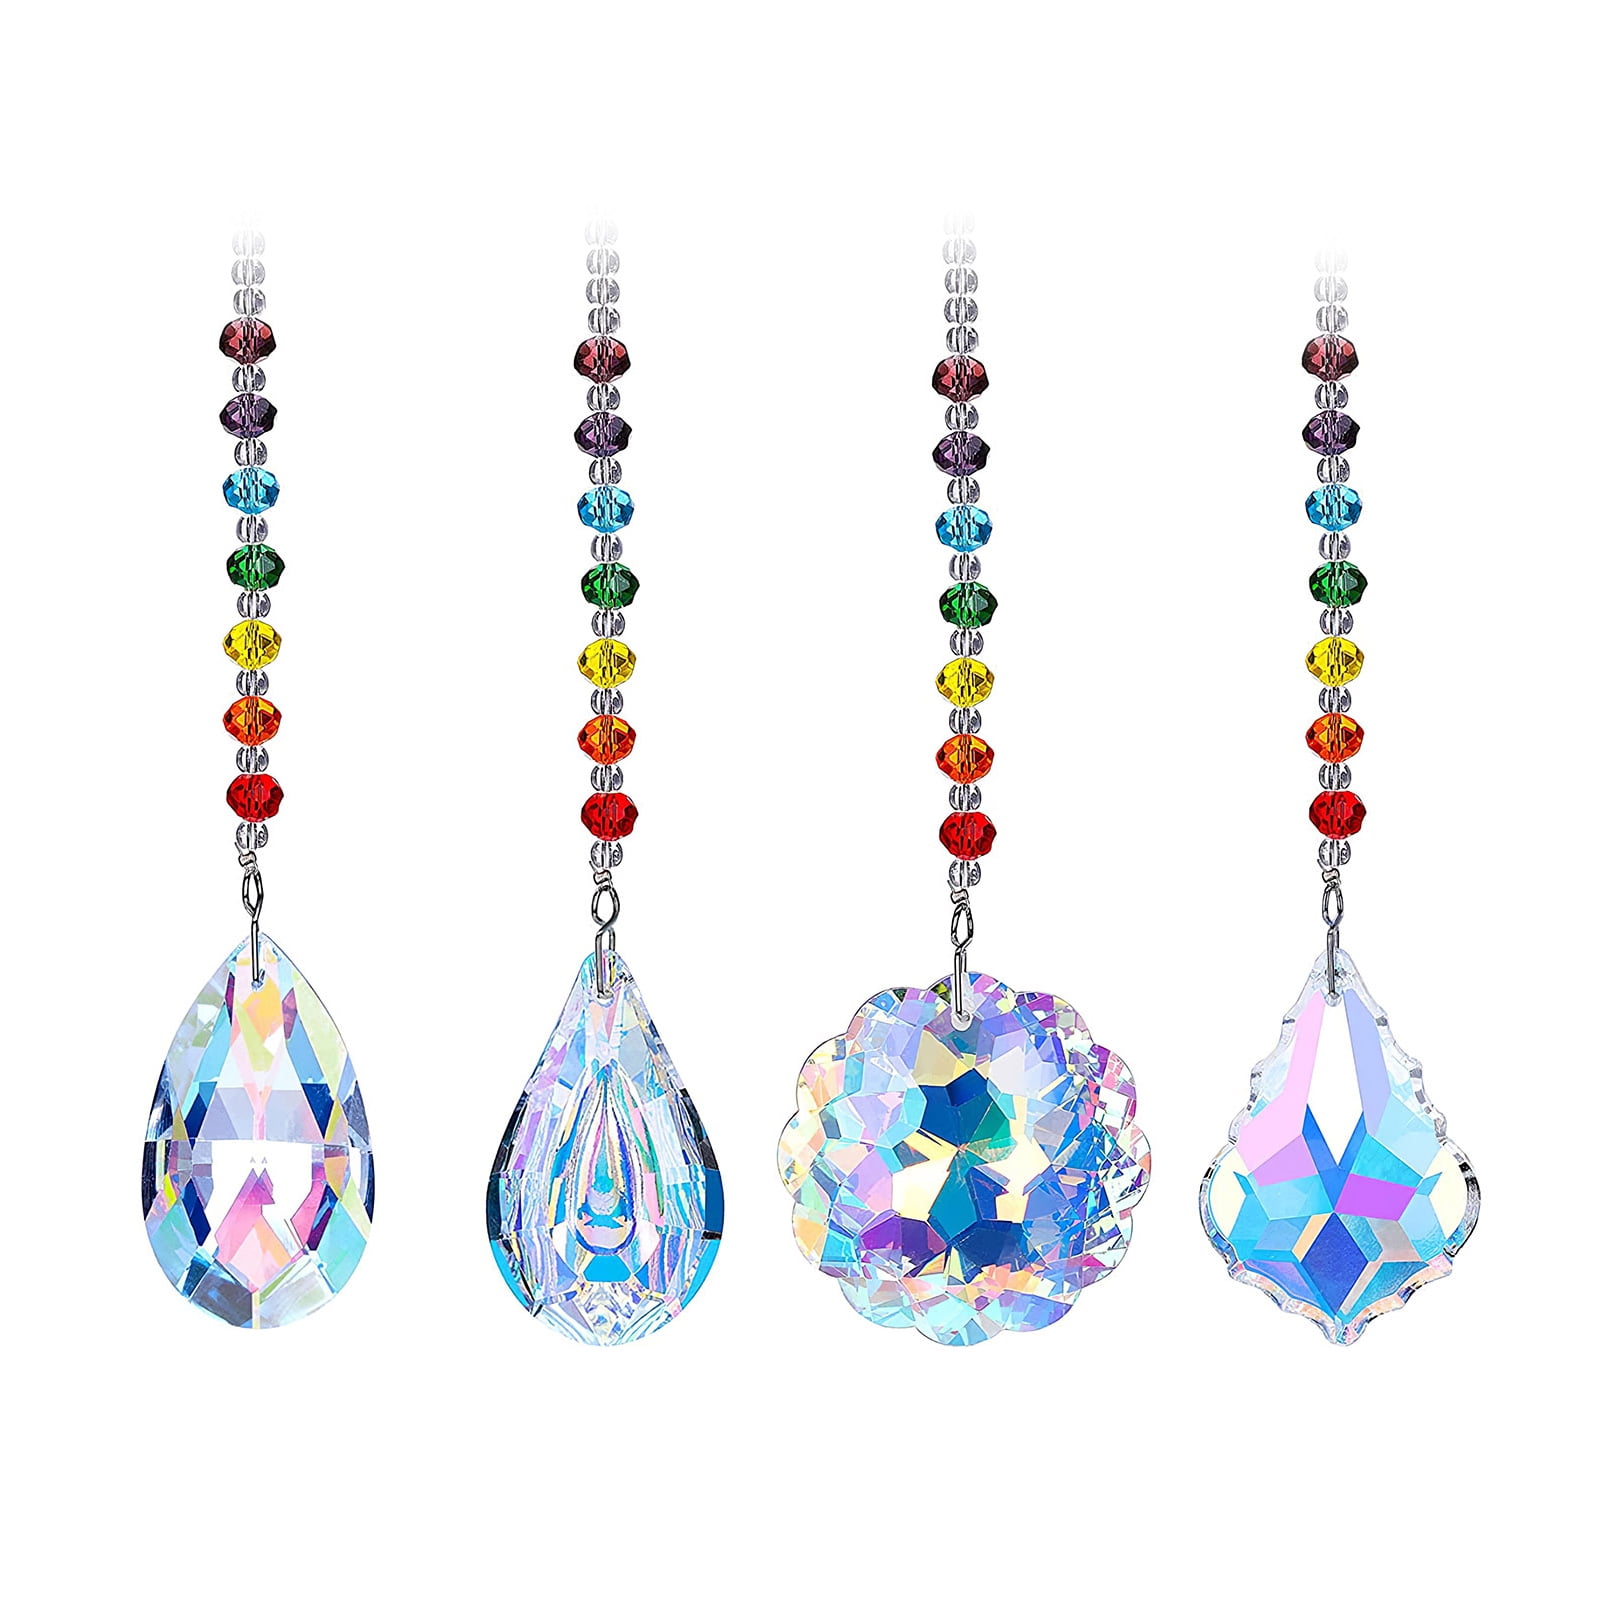 Crystal Round Ball Prism Hanging Ornament DIY Pendant Accessory Xmas Decor Gi MG 